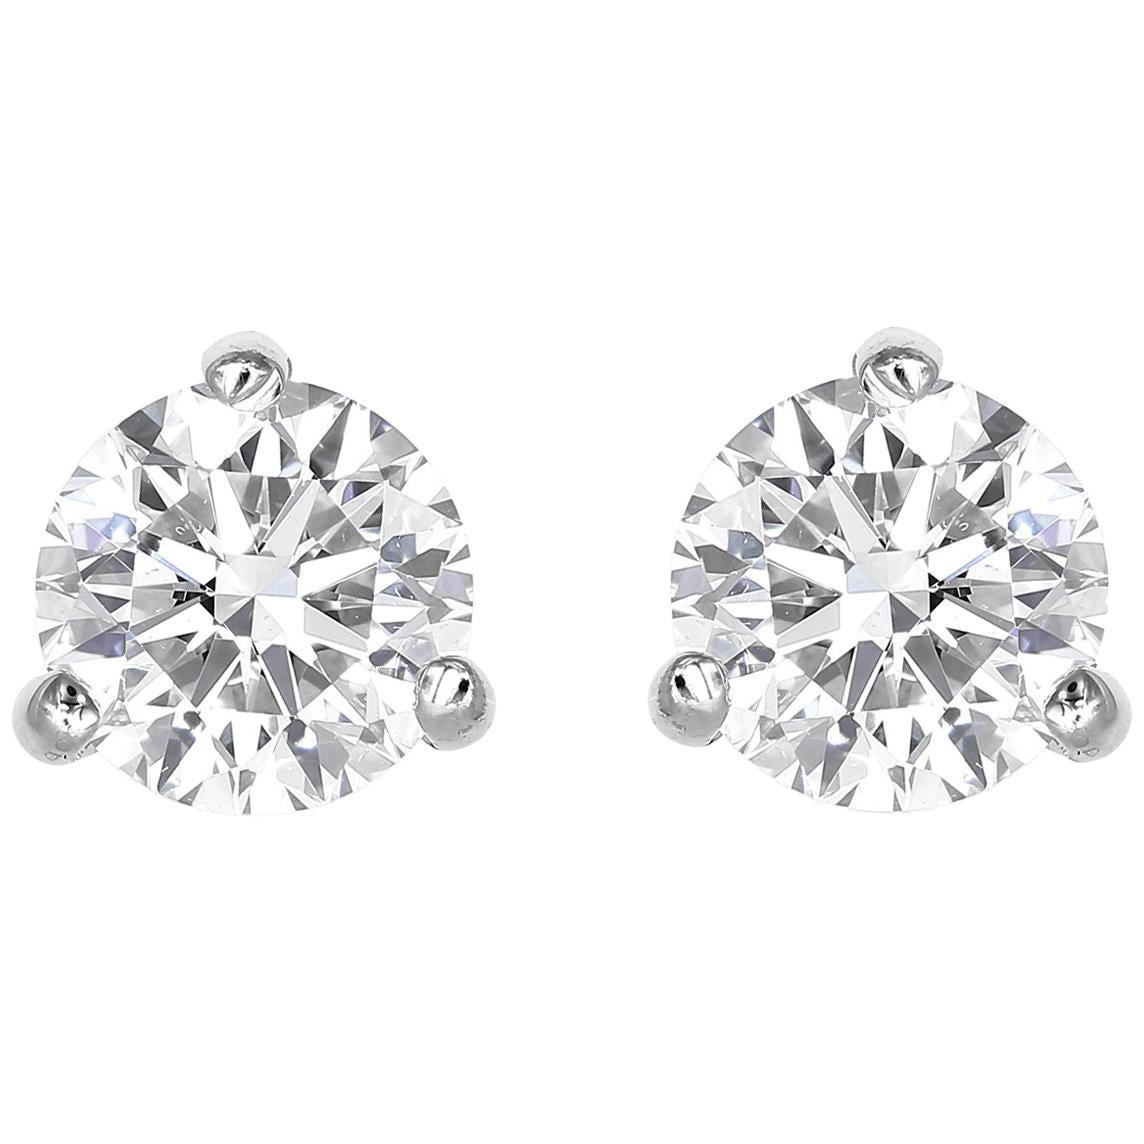 5.14 Carat Diamond Stud Earrings For Sale